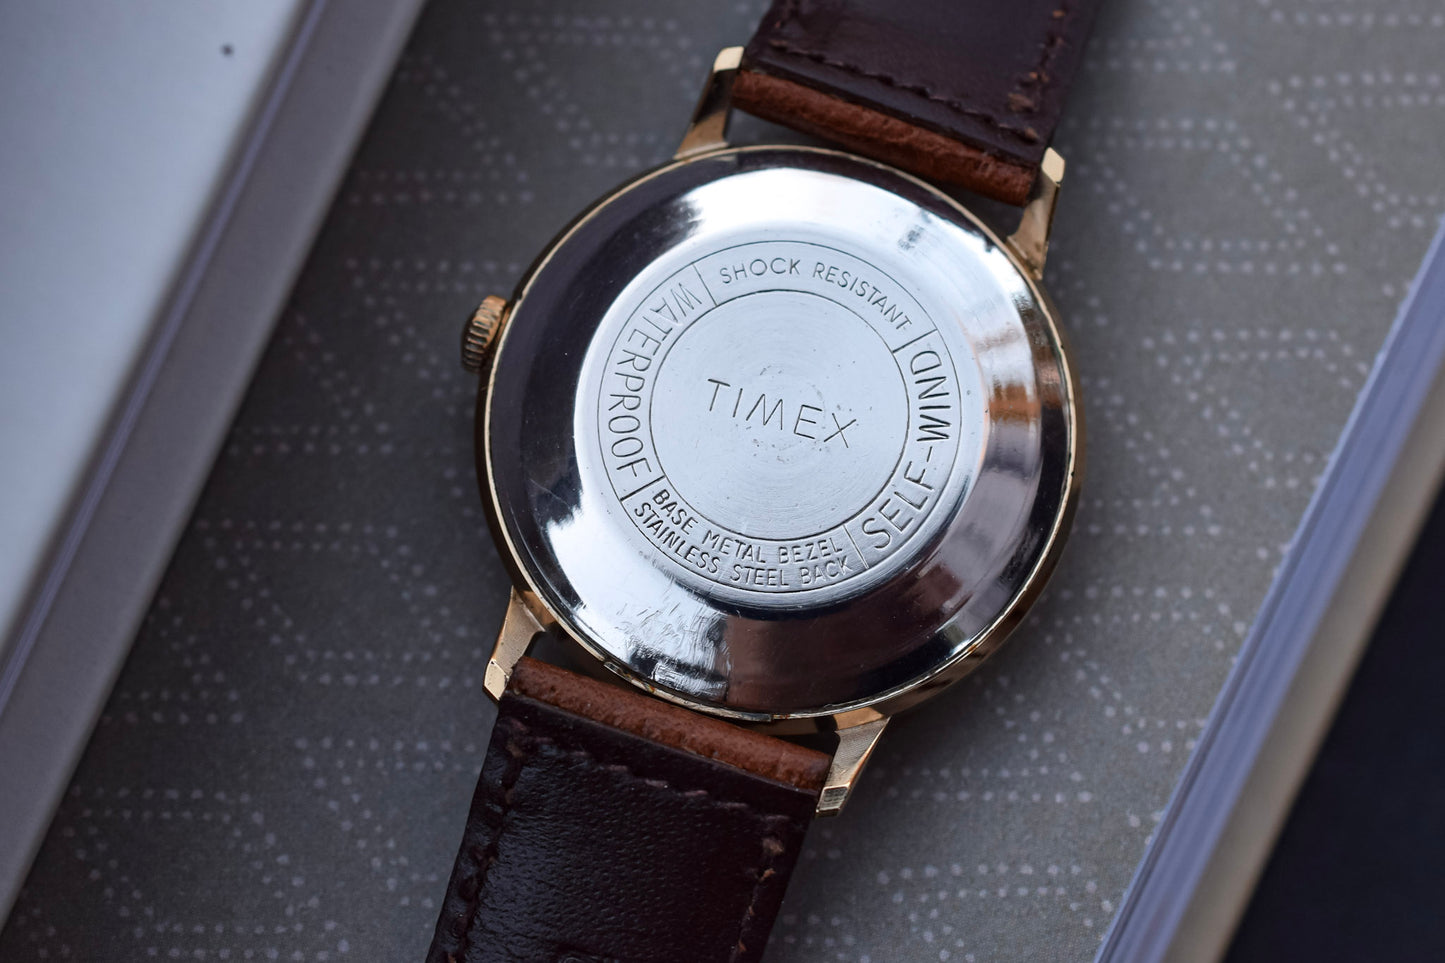 1967 Mechanical Self-Wind Timex Watch